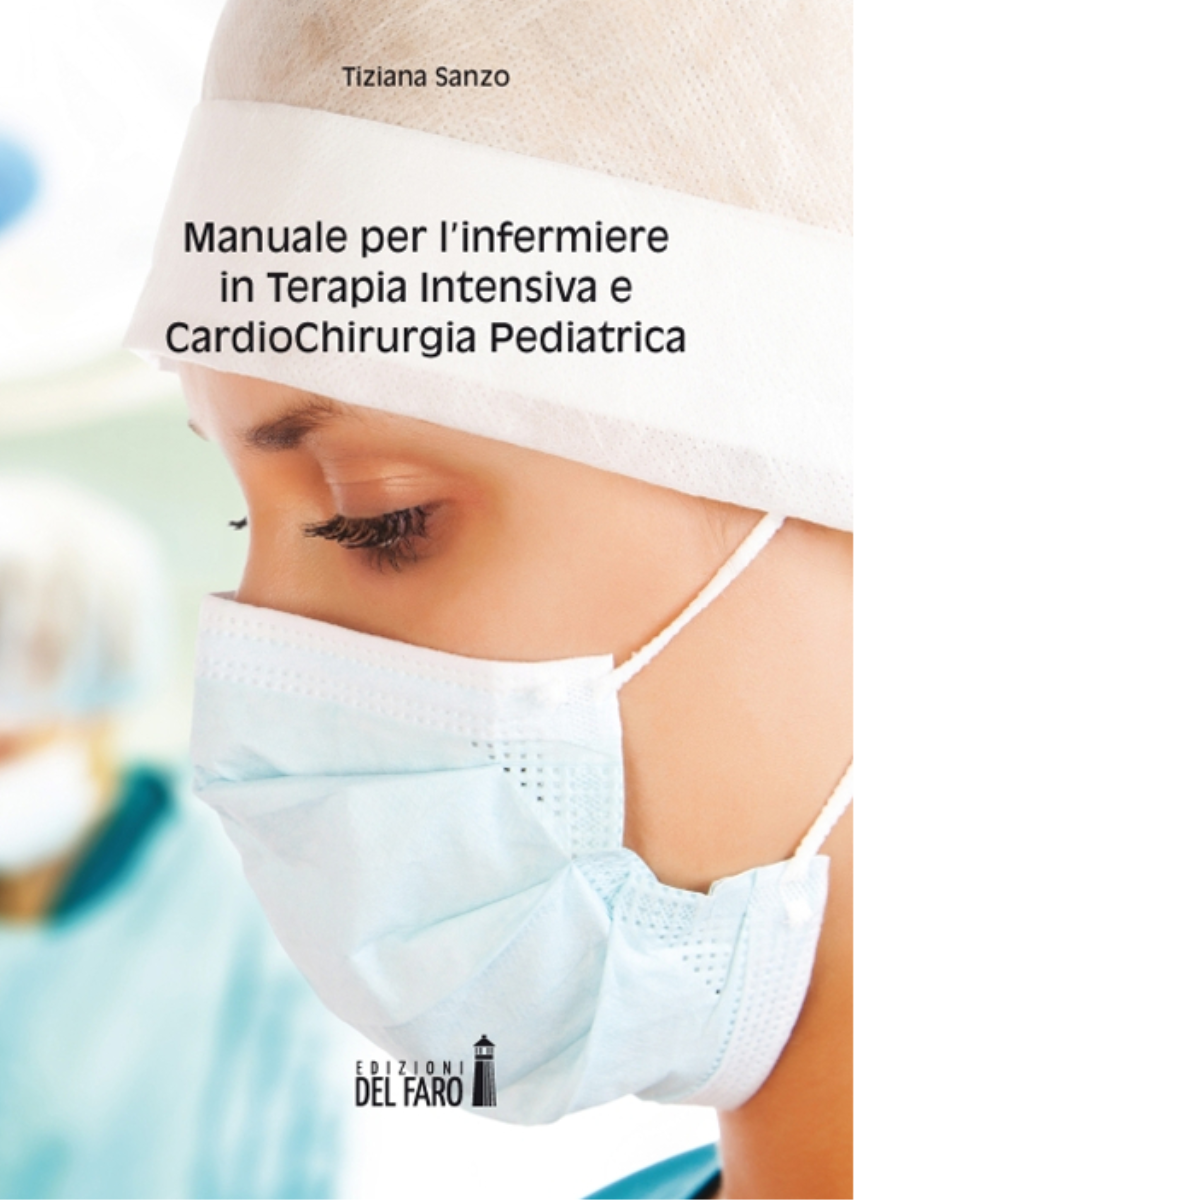 Manuale per l'infermiere in terapia intensiva e cardiochirurgia pediatrica- 2014